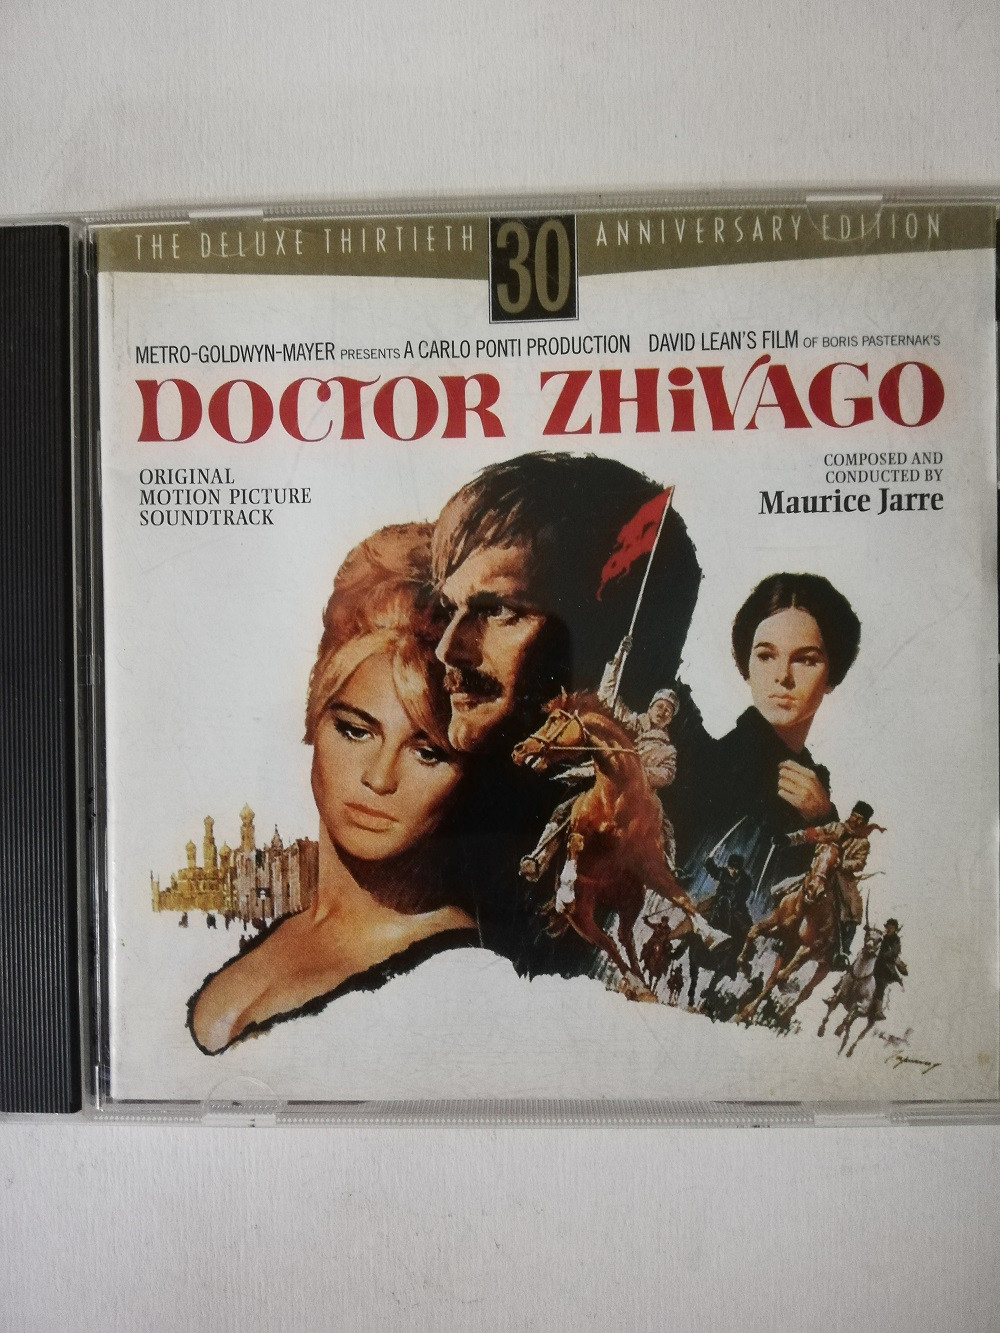 Imagen CD DOCTOR ZHIVAGO - ORIGINAL MOTION PICTURE SOUNDTRACK 1